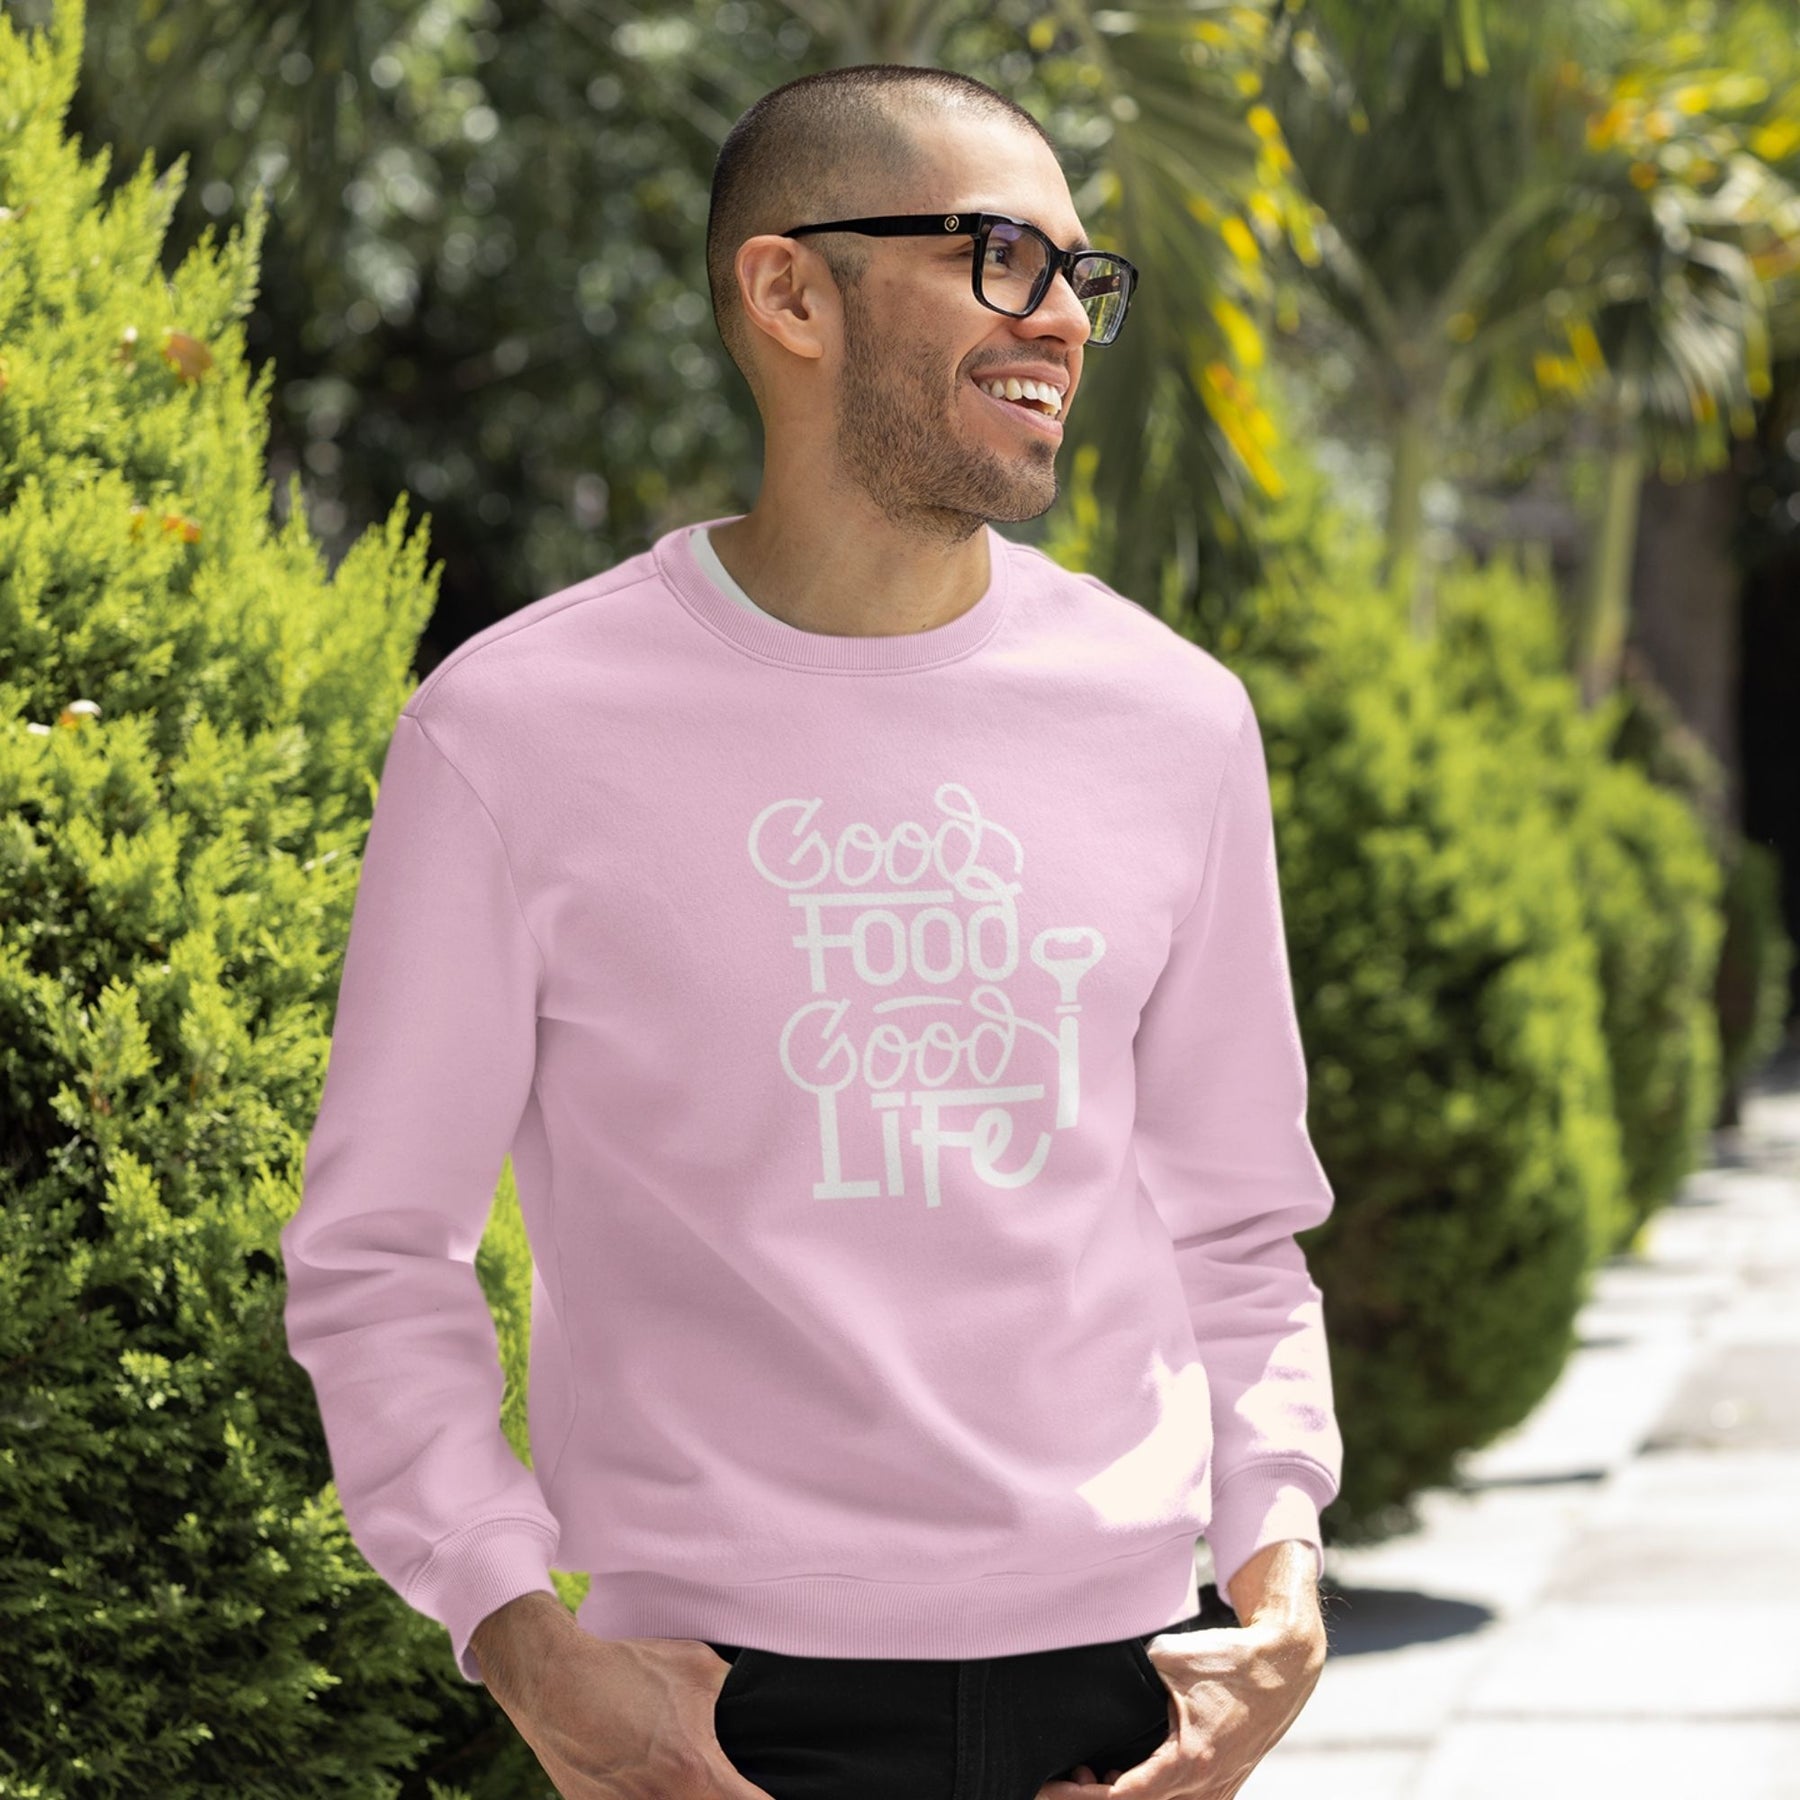 good-food-good-life-cotton-printed-unisex-light-pink-men-model-sweatshirt-gogirgit-com